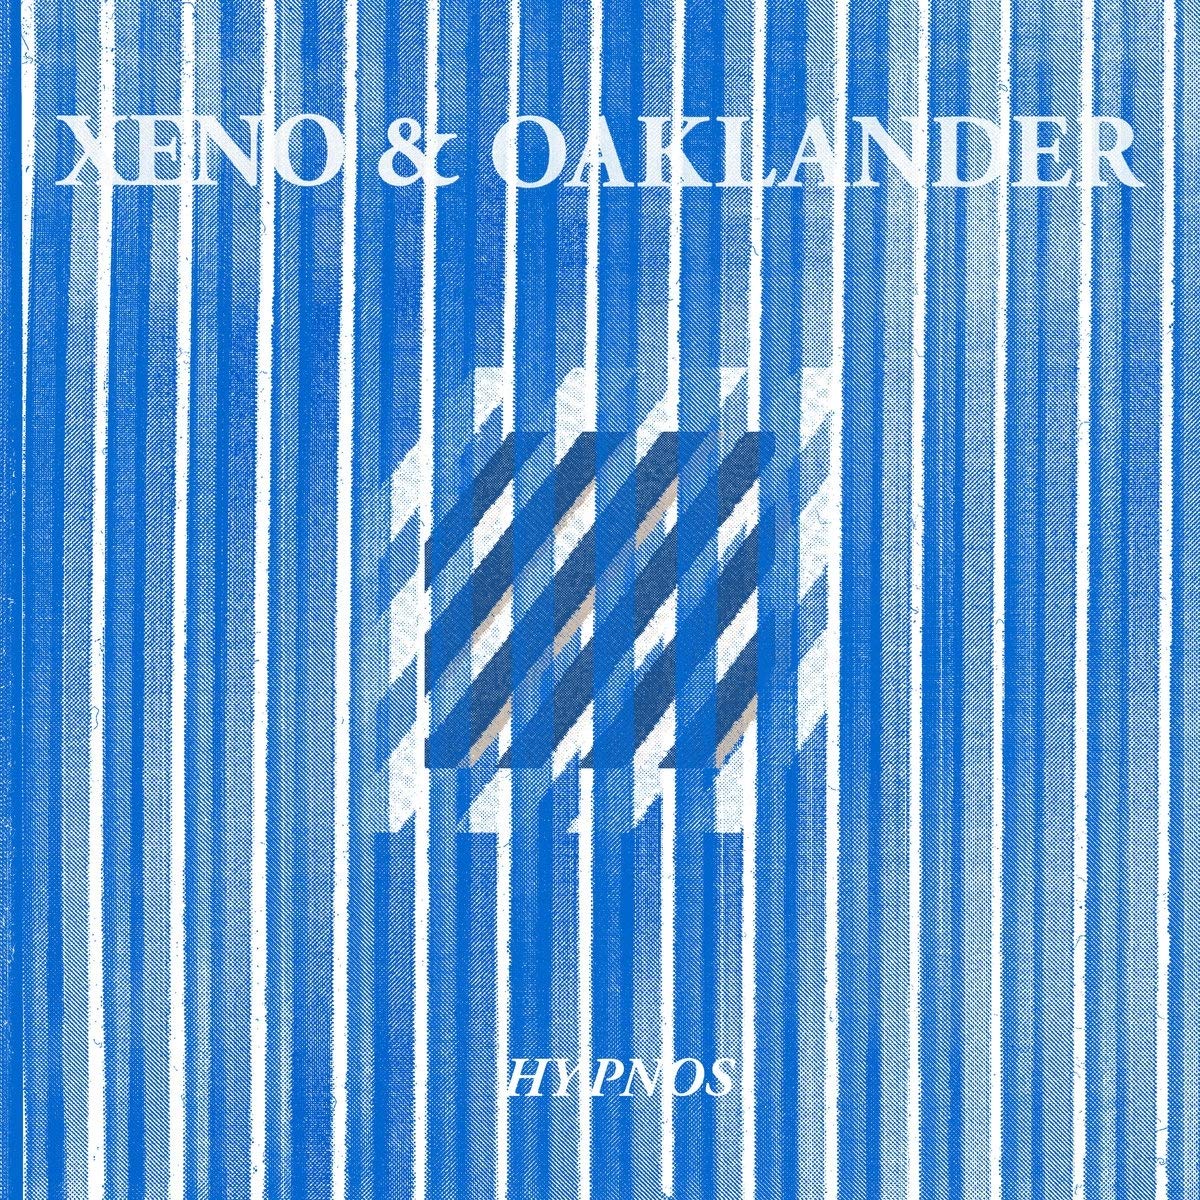 Xeno & Oaklander ‎– Hypnos